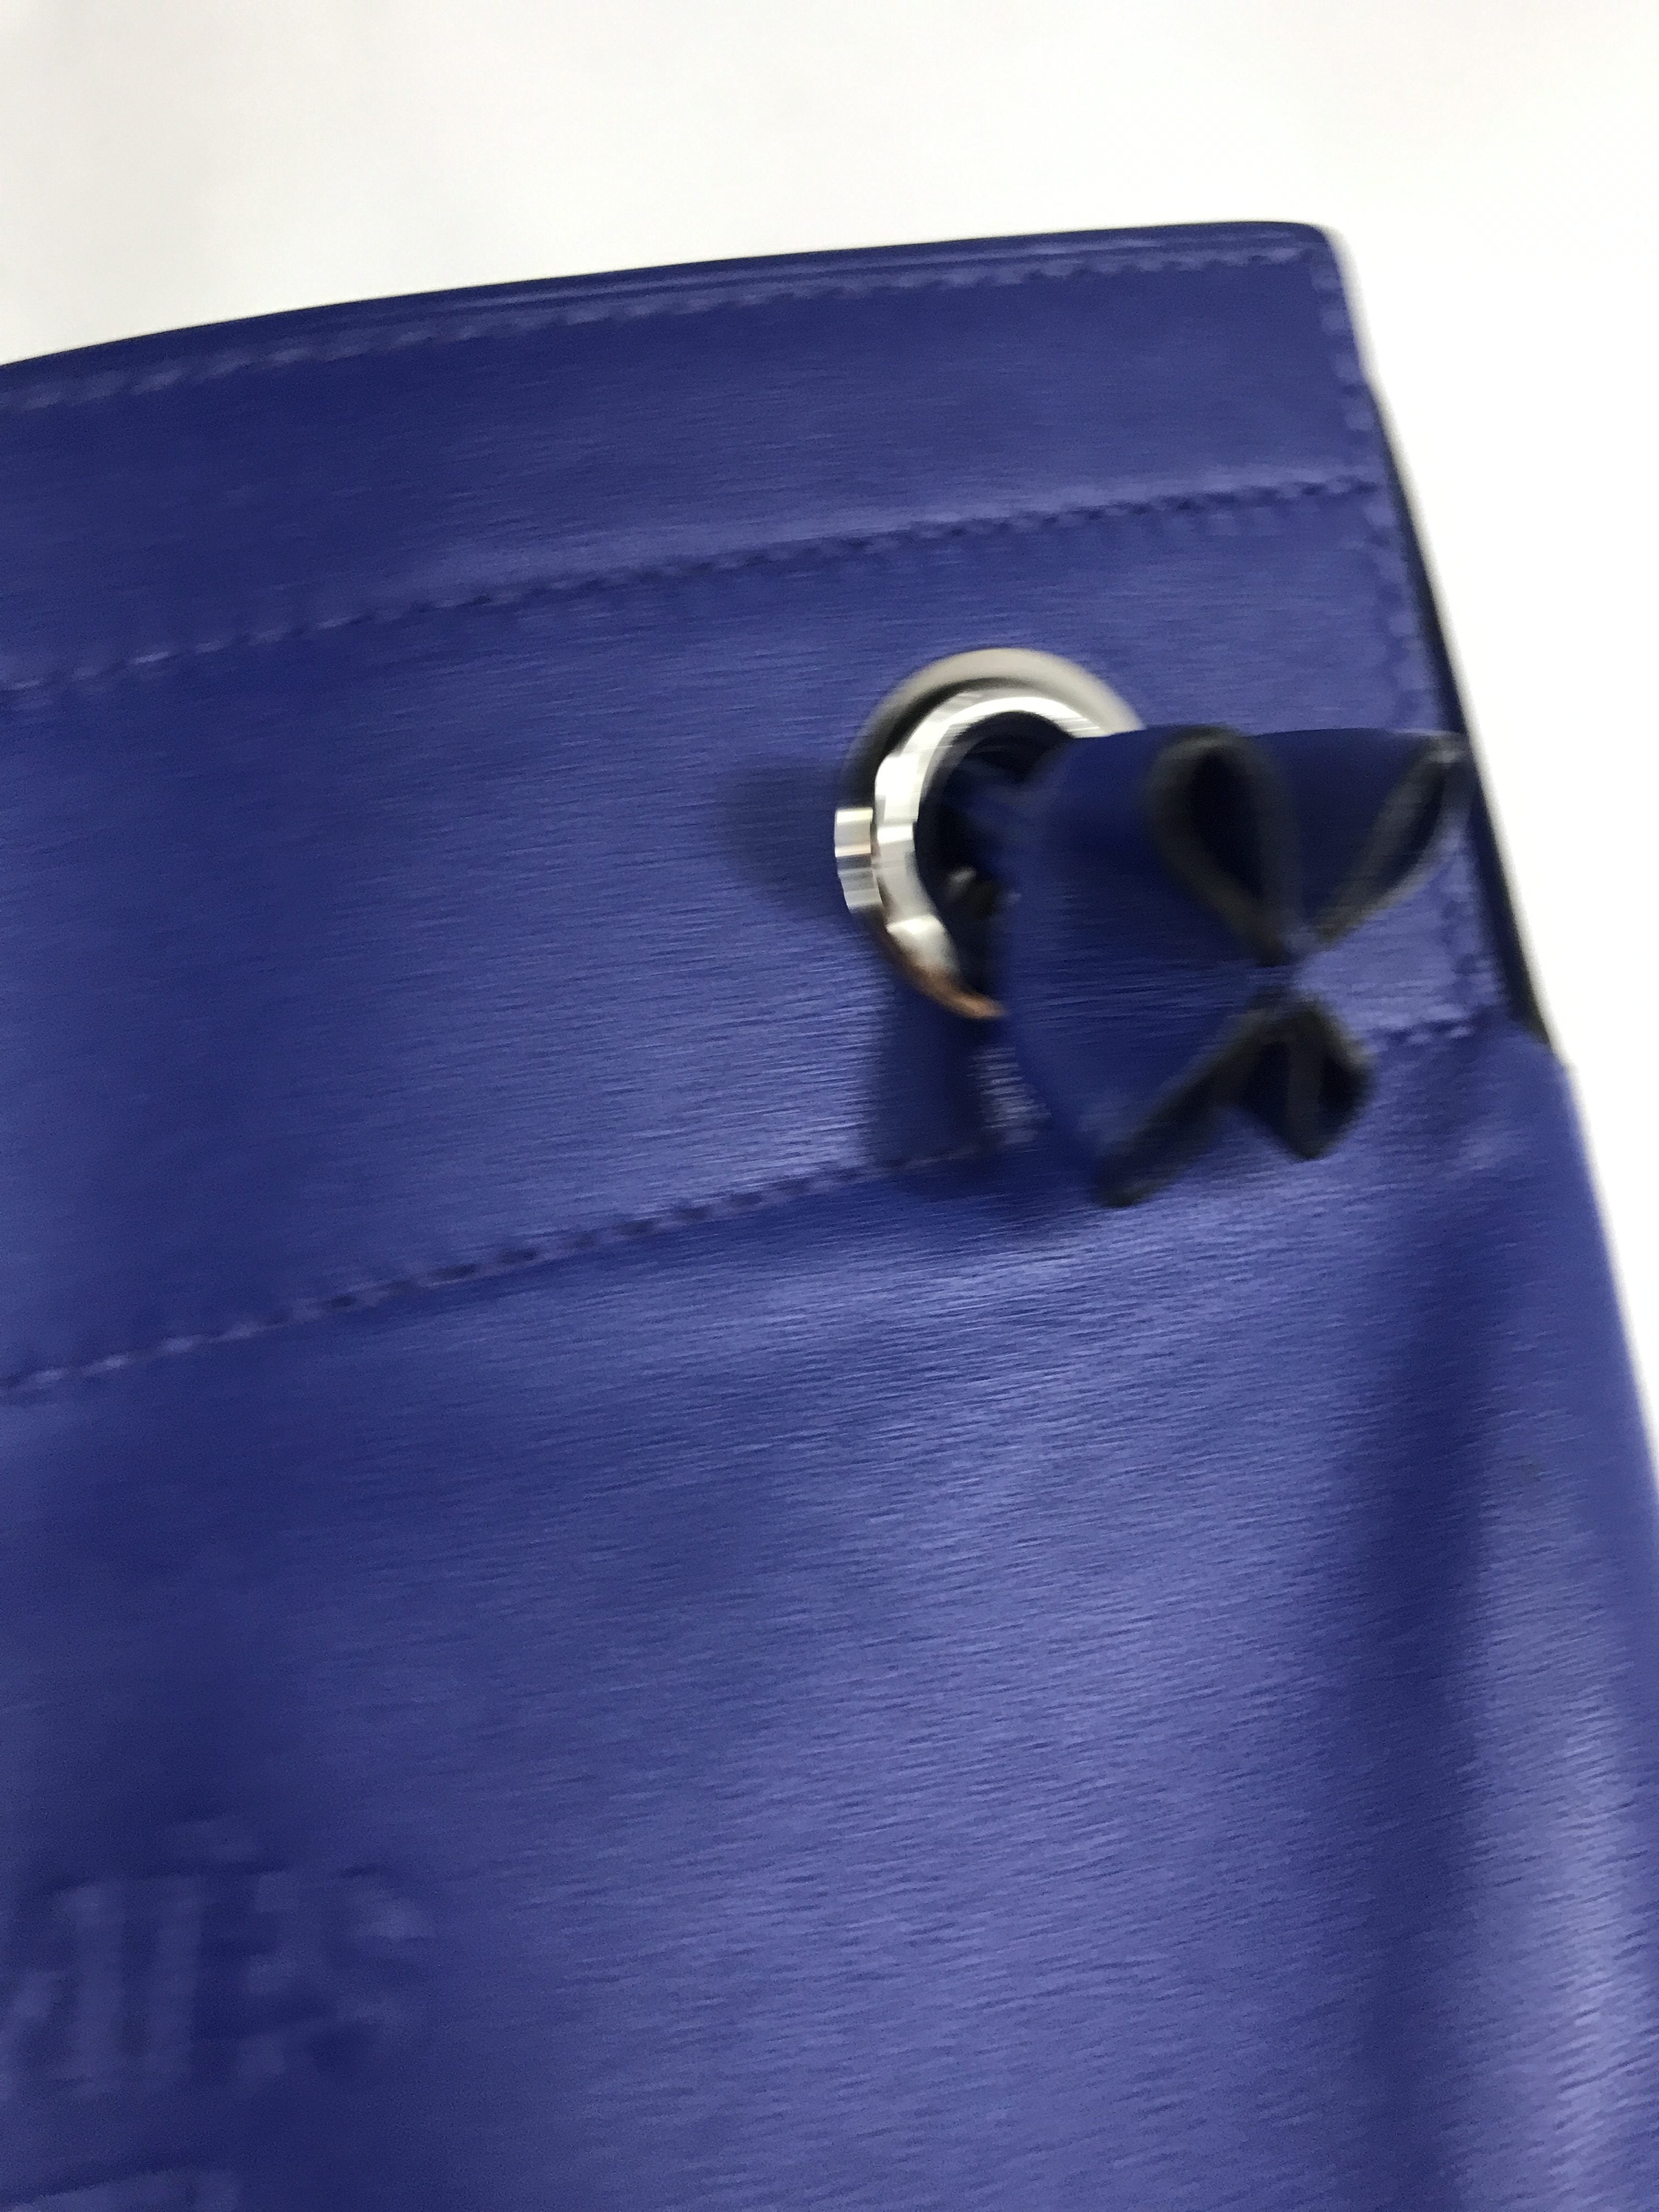 Cobalt Blue Aline Mini Crossbody Bag W/PHW